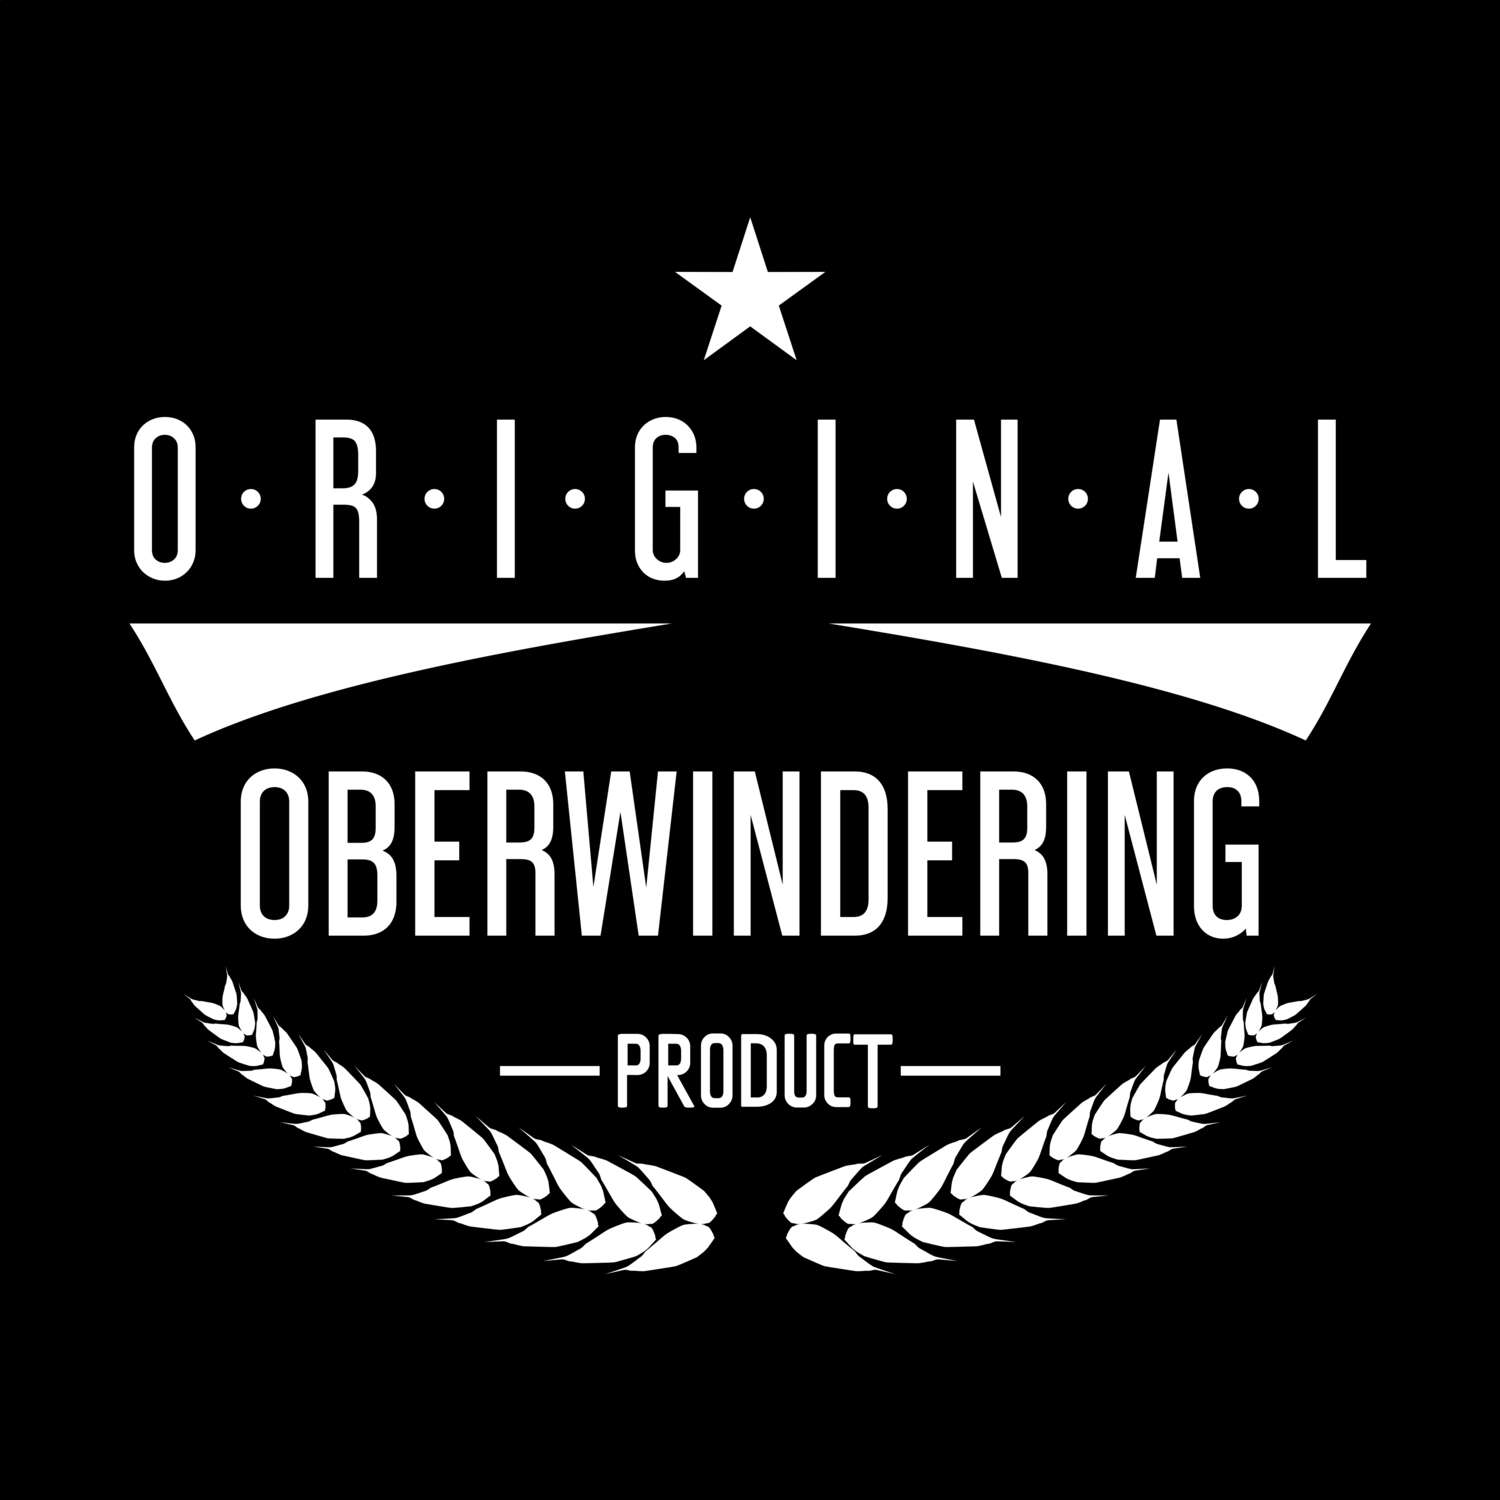 Oberwindering T-Shirt »Original Product«